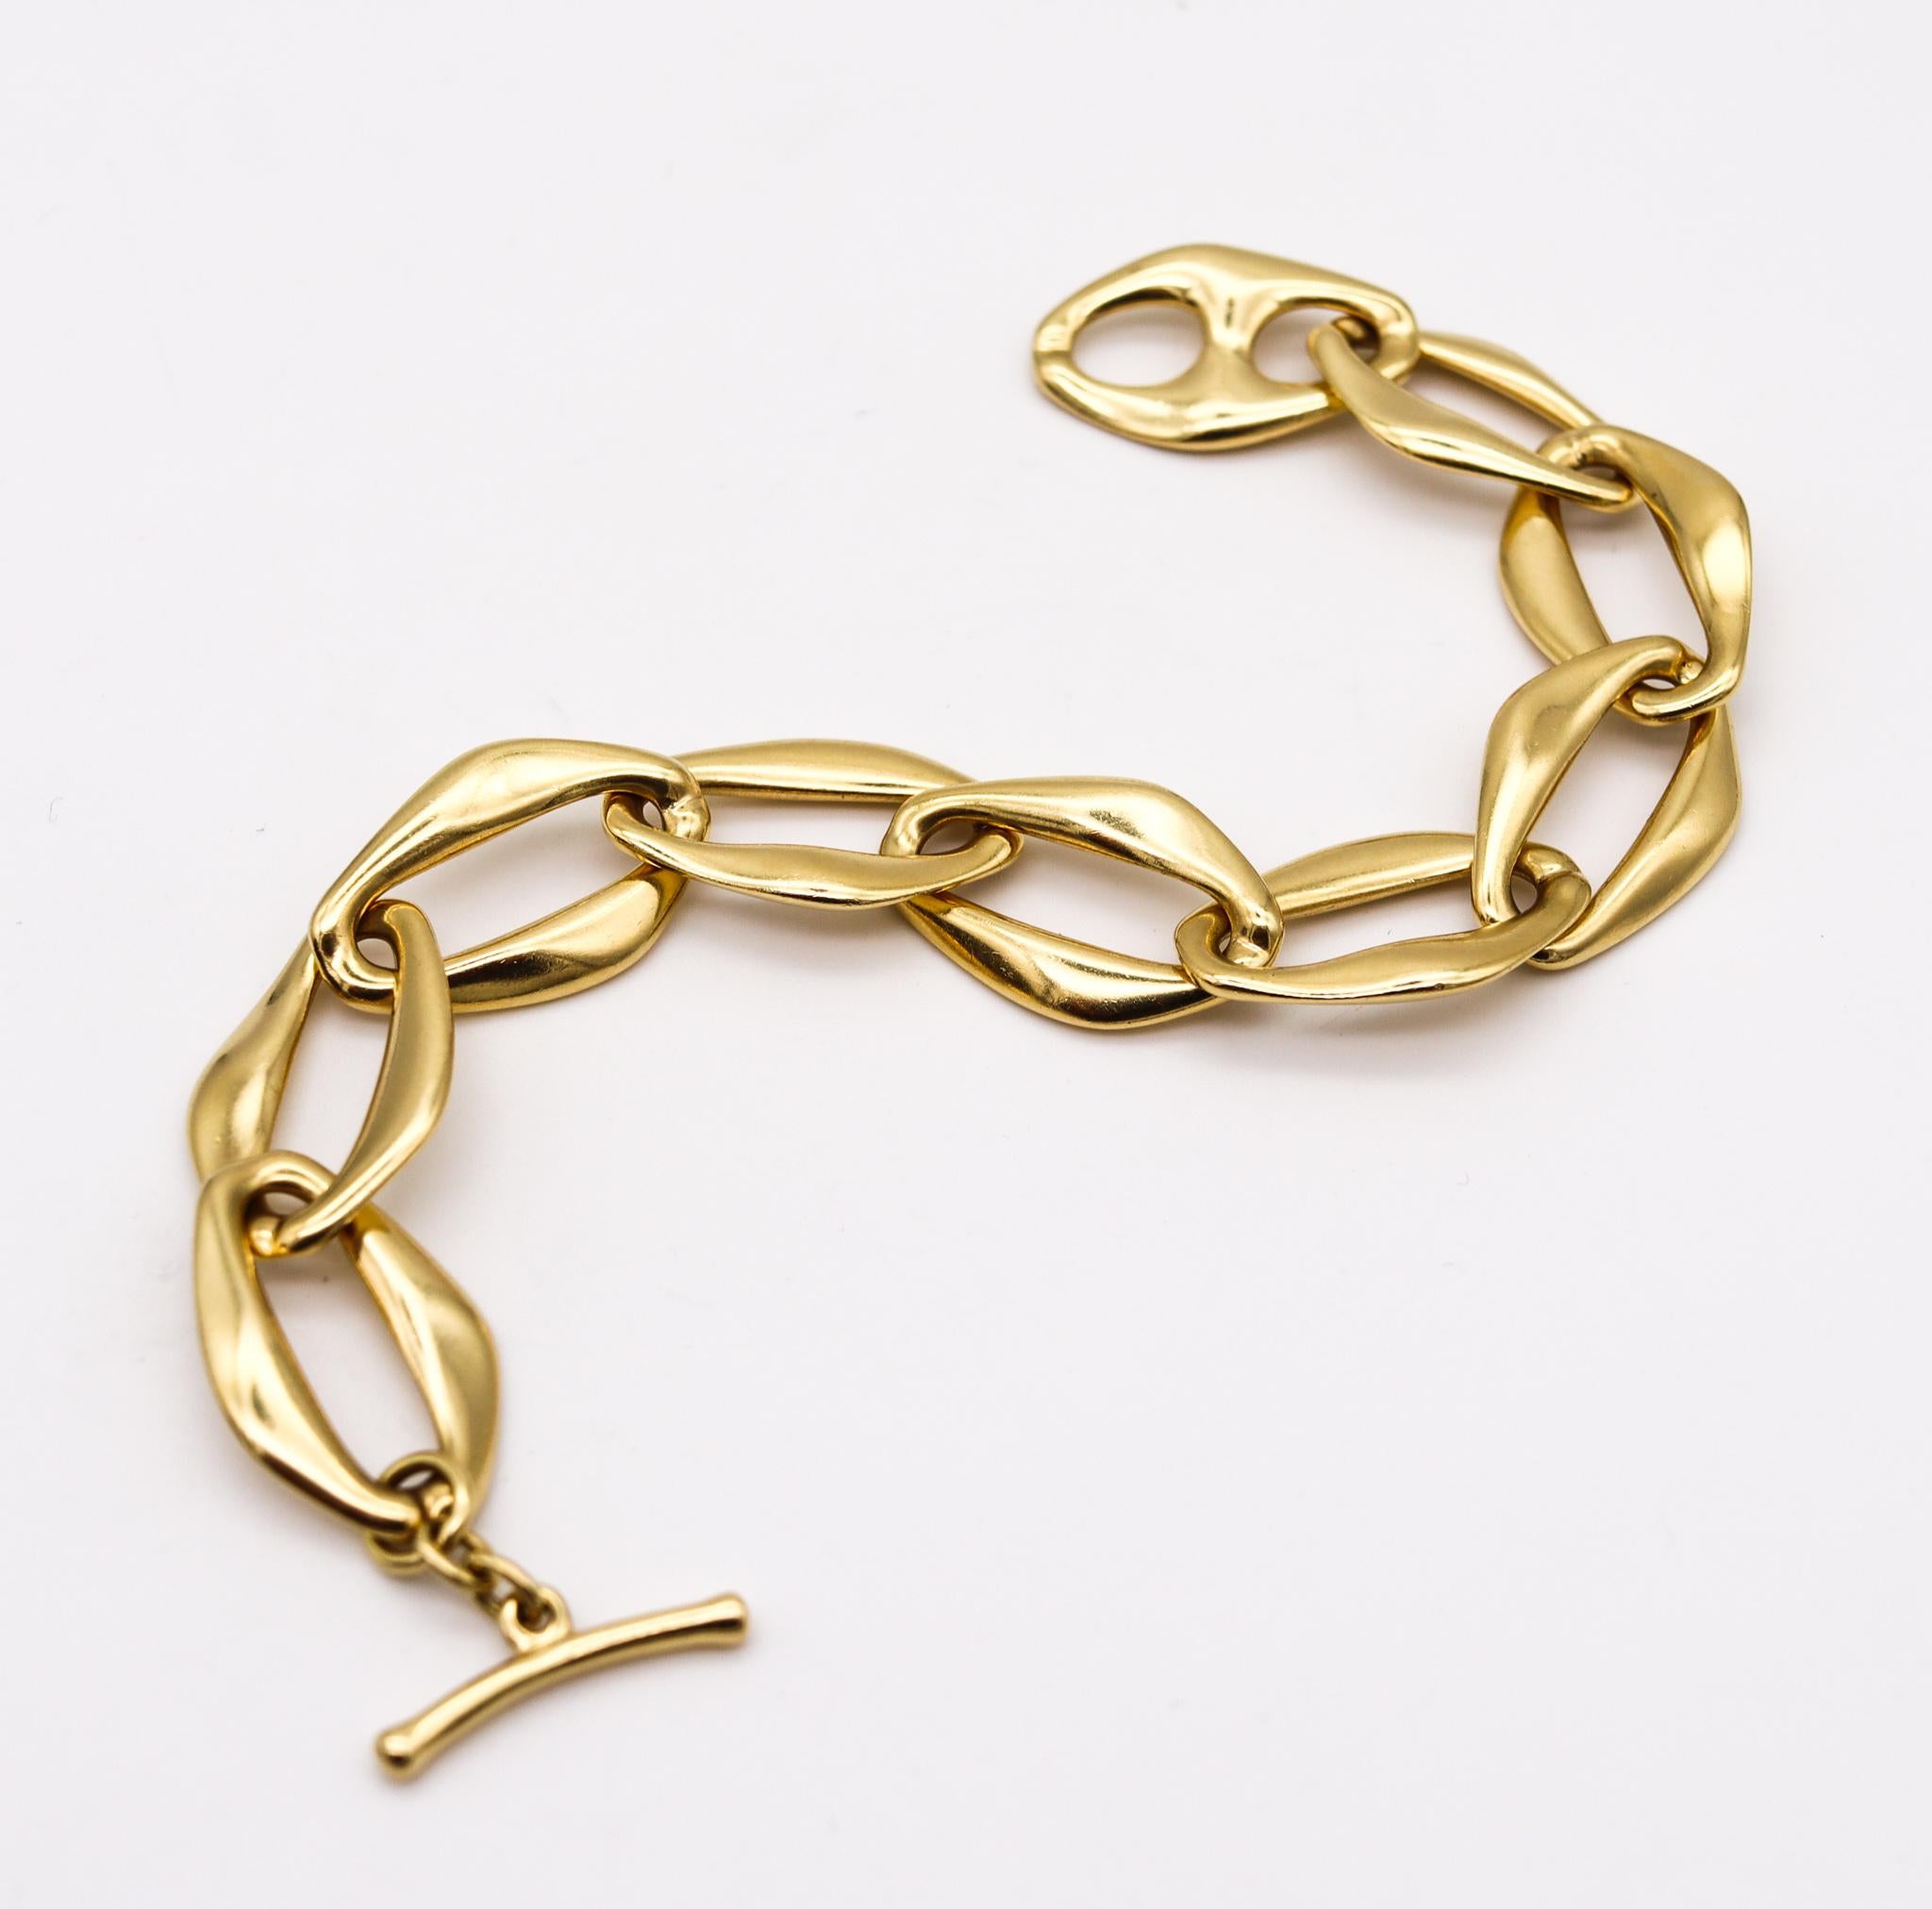 Modernist Tiffany & Co 1978 by Elsa Peretti Rare Aegean Links Bracelet in 18Kt Yellow Gold